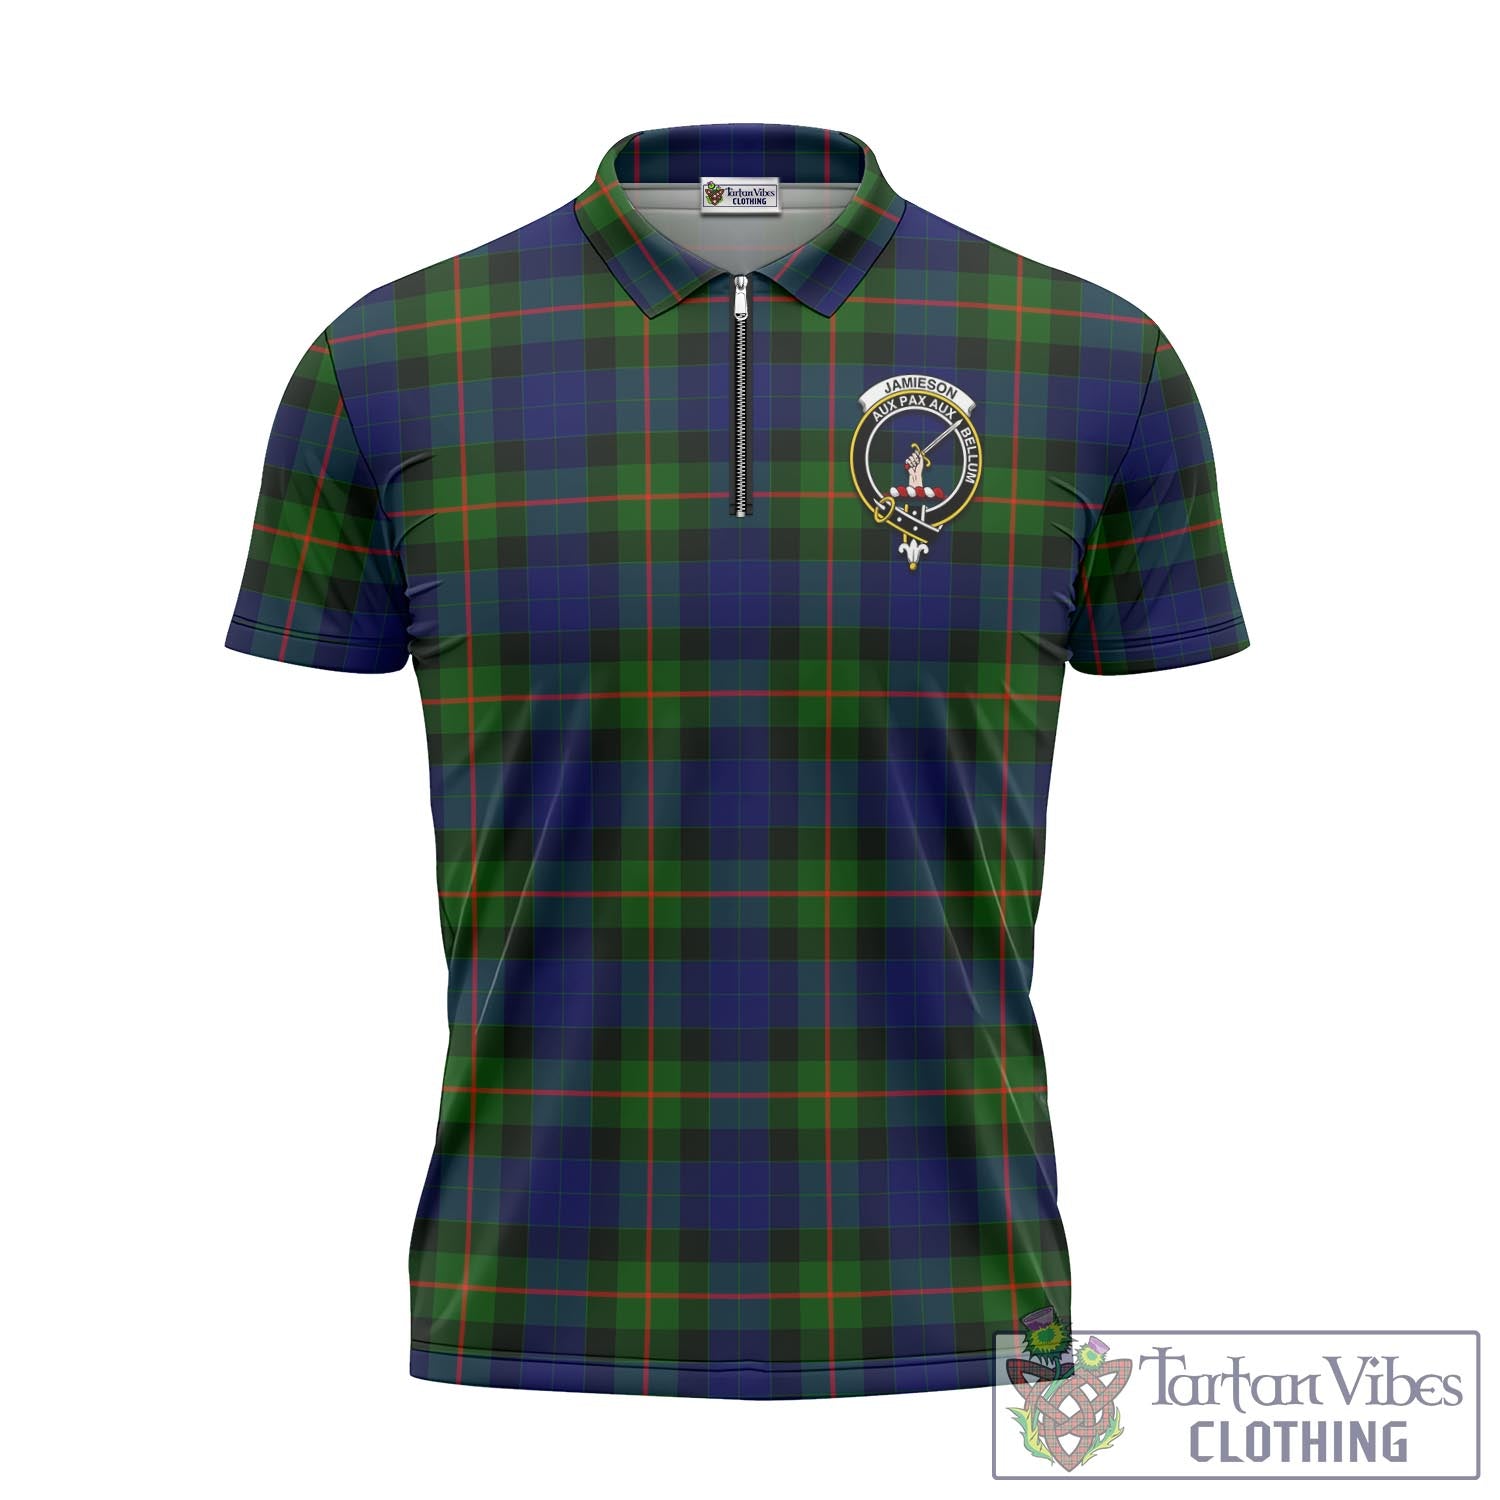 Tartan Vibes Clothing Jamieson Tartan Zipper Polo Shirt with Family Crest